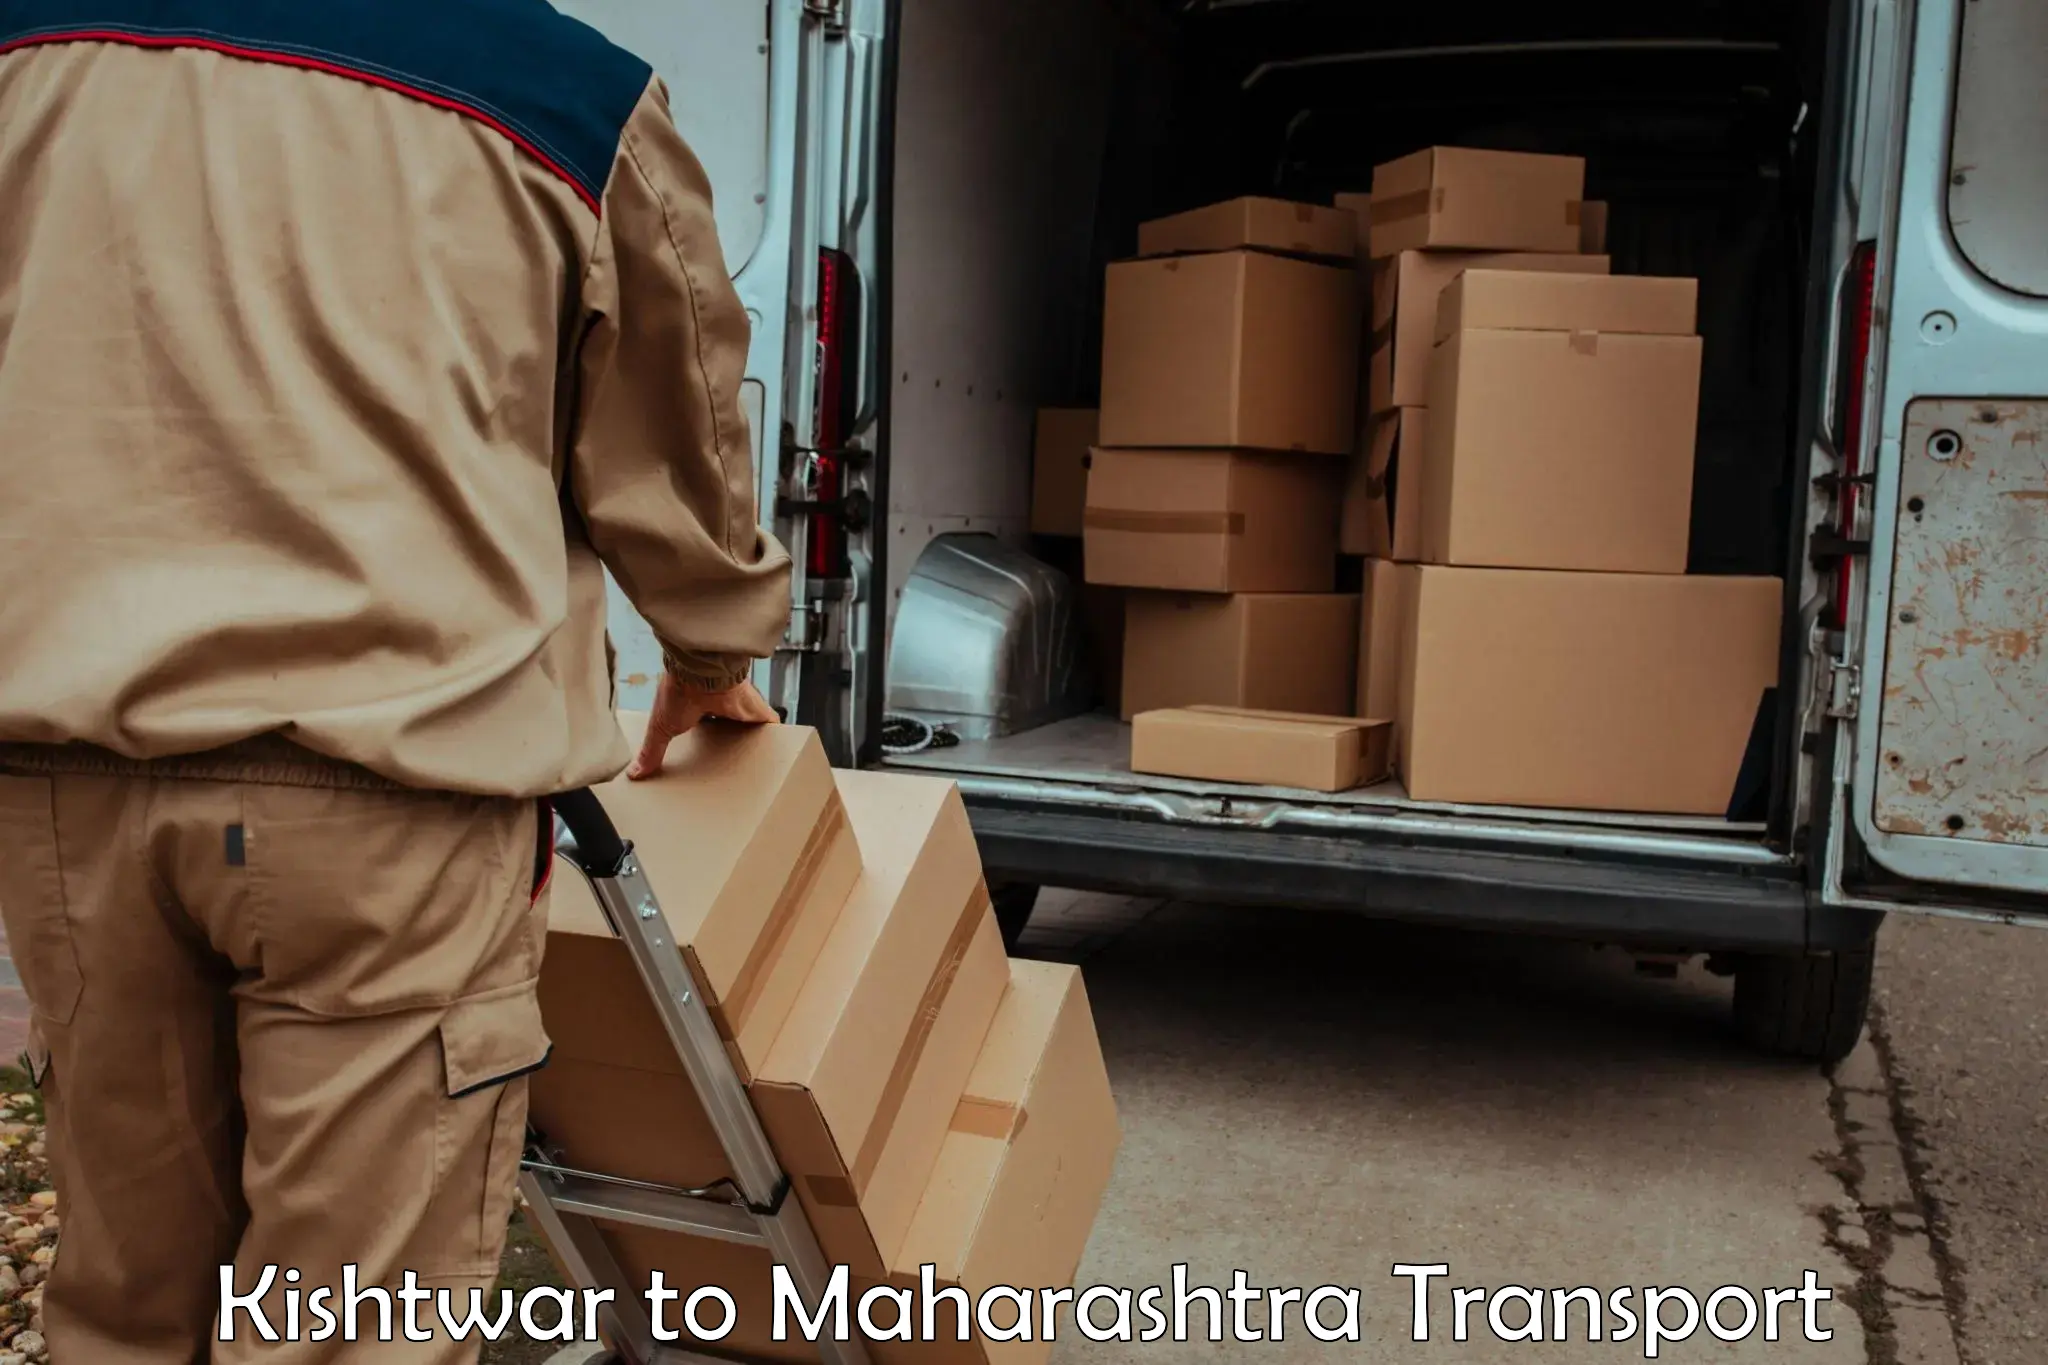 Goods delivery service Kishtwar to Chakan